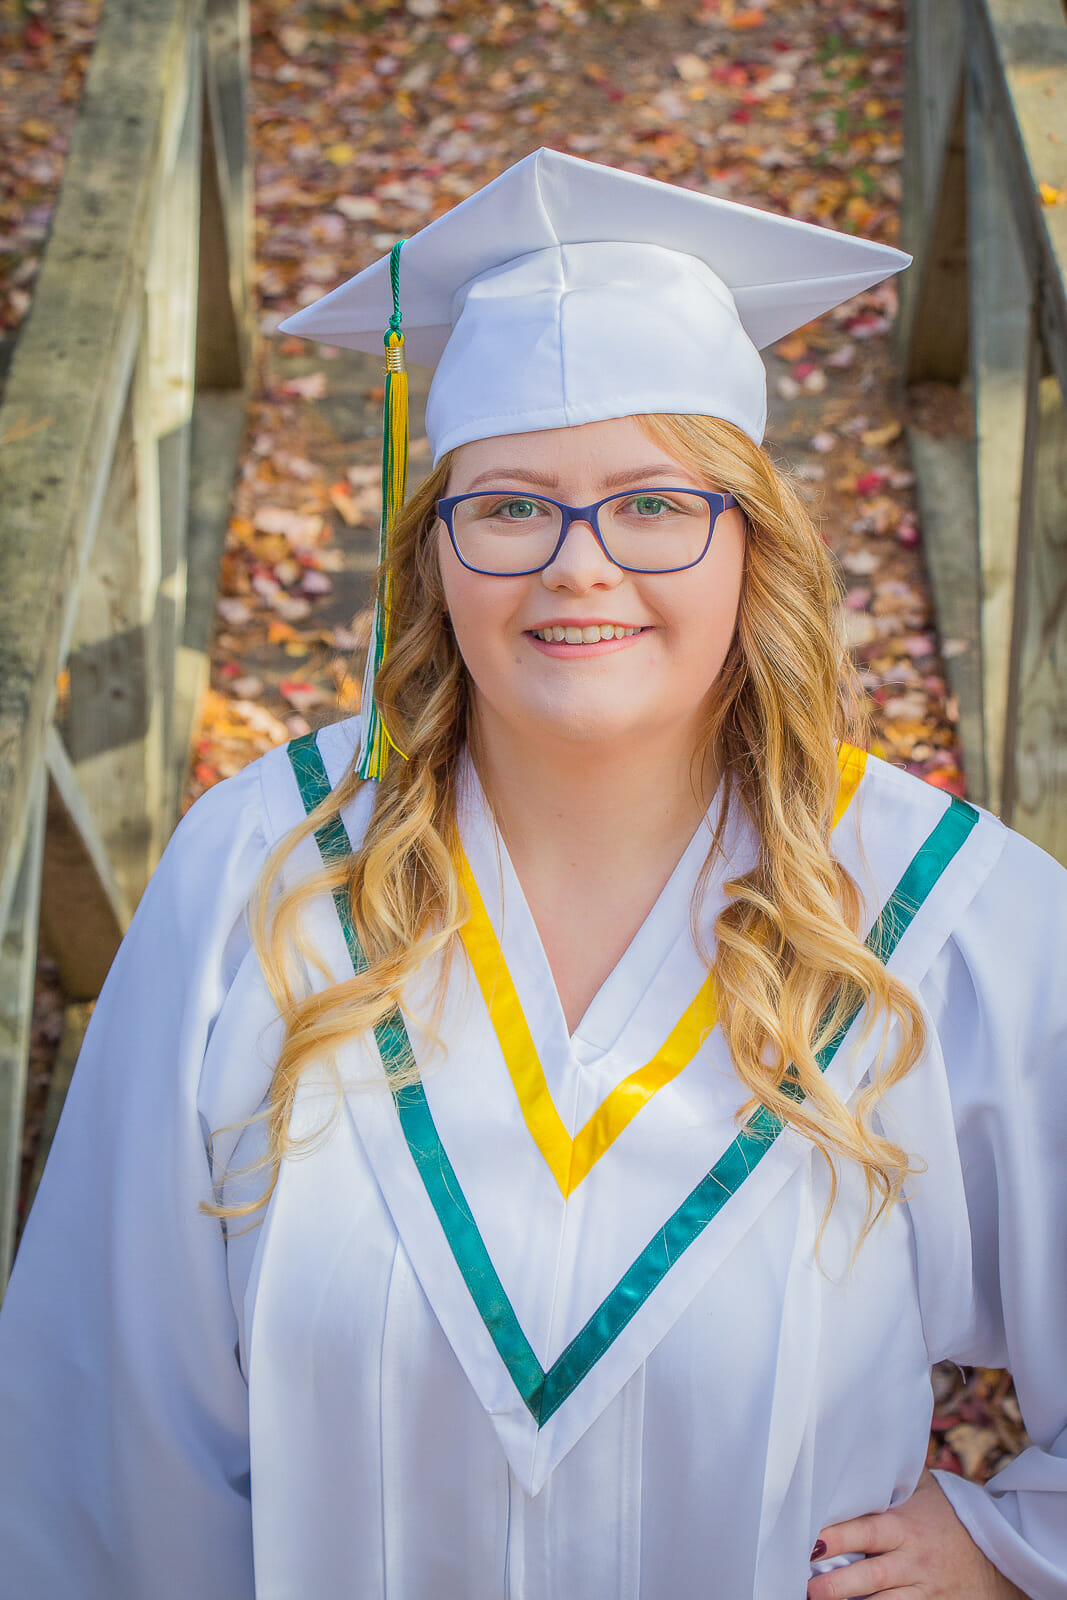 A photo of Kaitlyn Marshall for her graduation photos